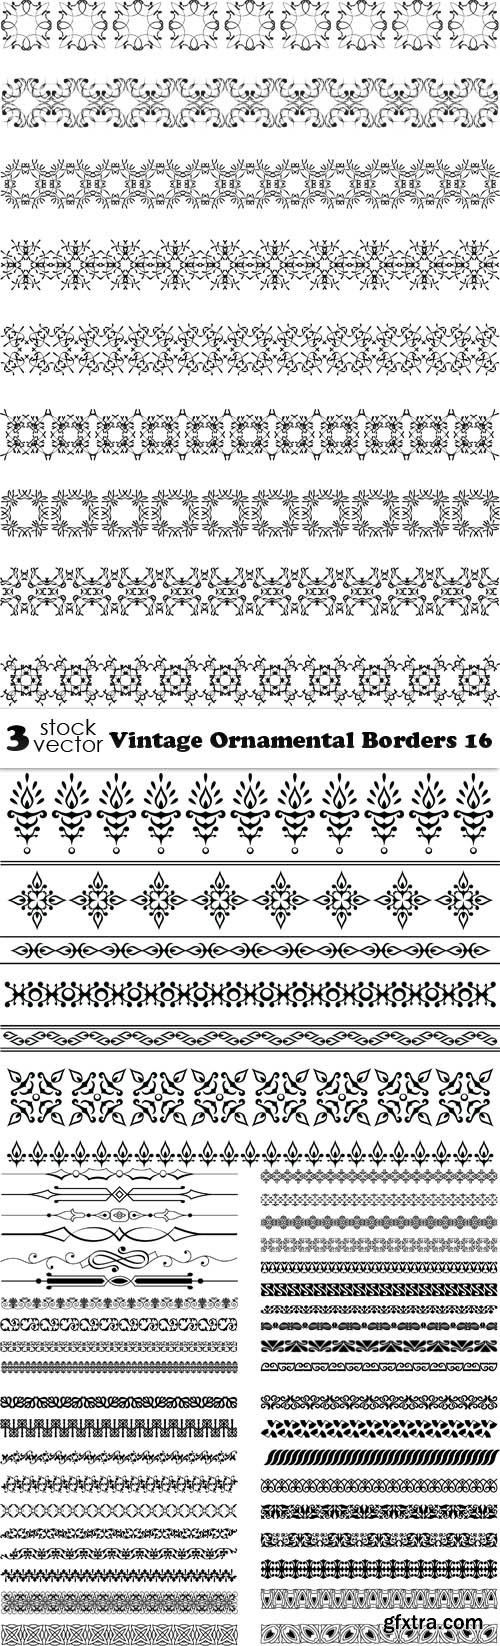 Vectors - Vintage Ornamental Borders 16